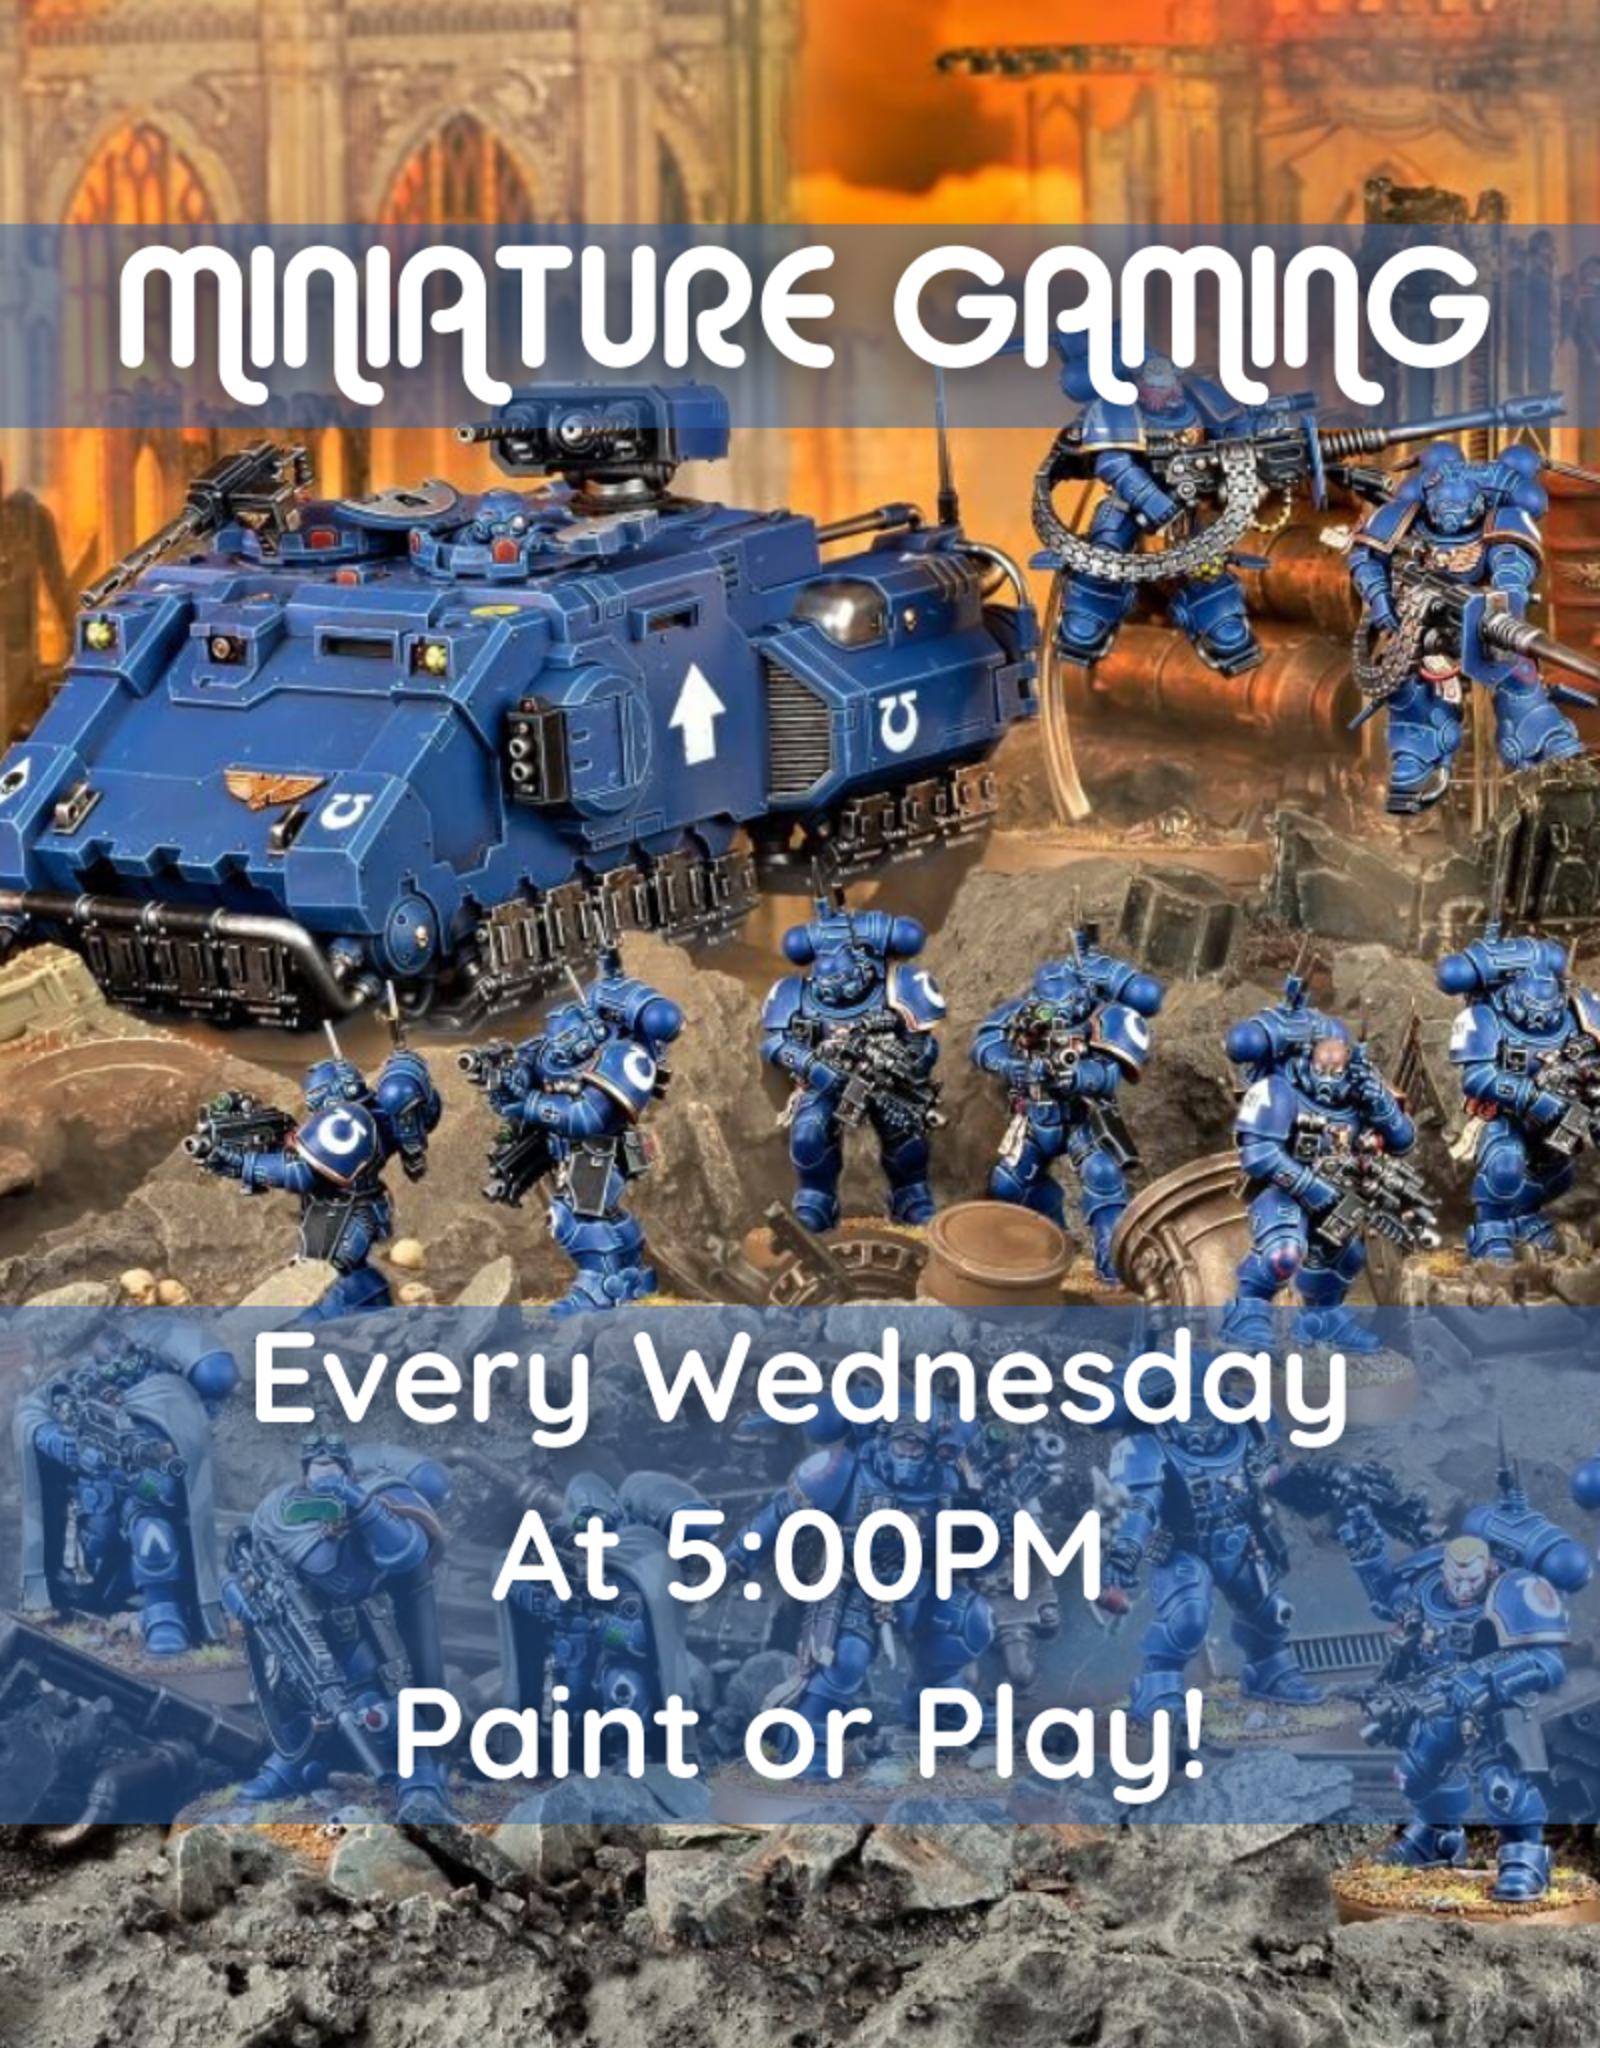 Wednesday - Miniature Gaming